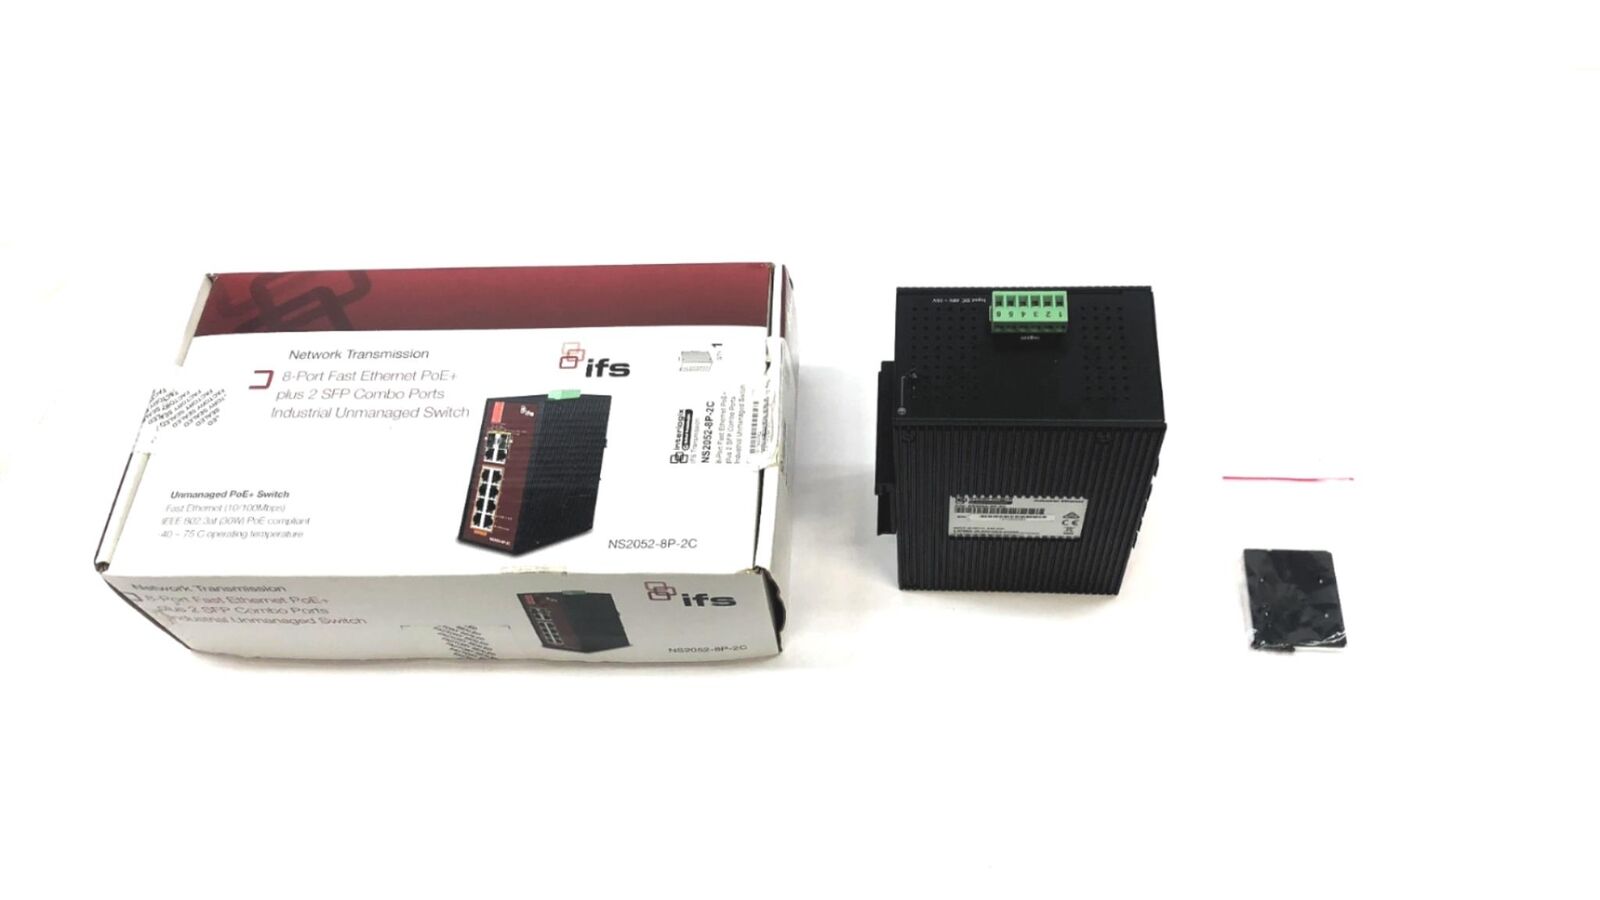 Interlogix 8-Port Fast Ethernet PoE+ Unmanaged Switch NS2052-8P-2C NOS